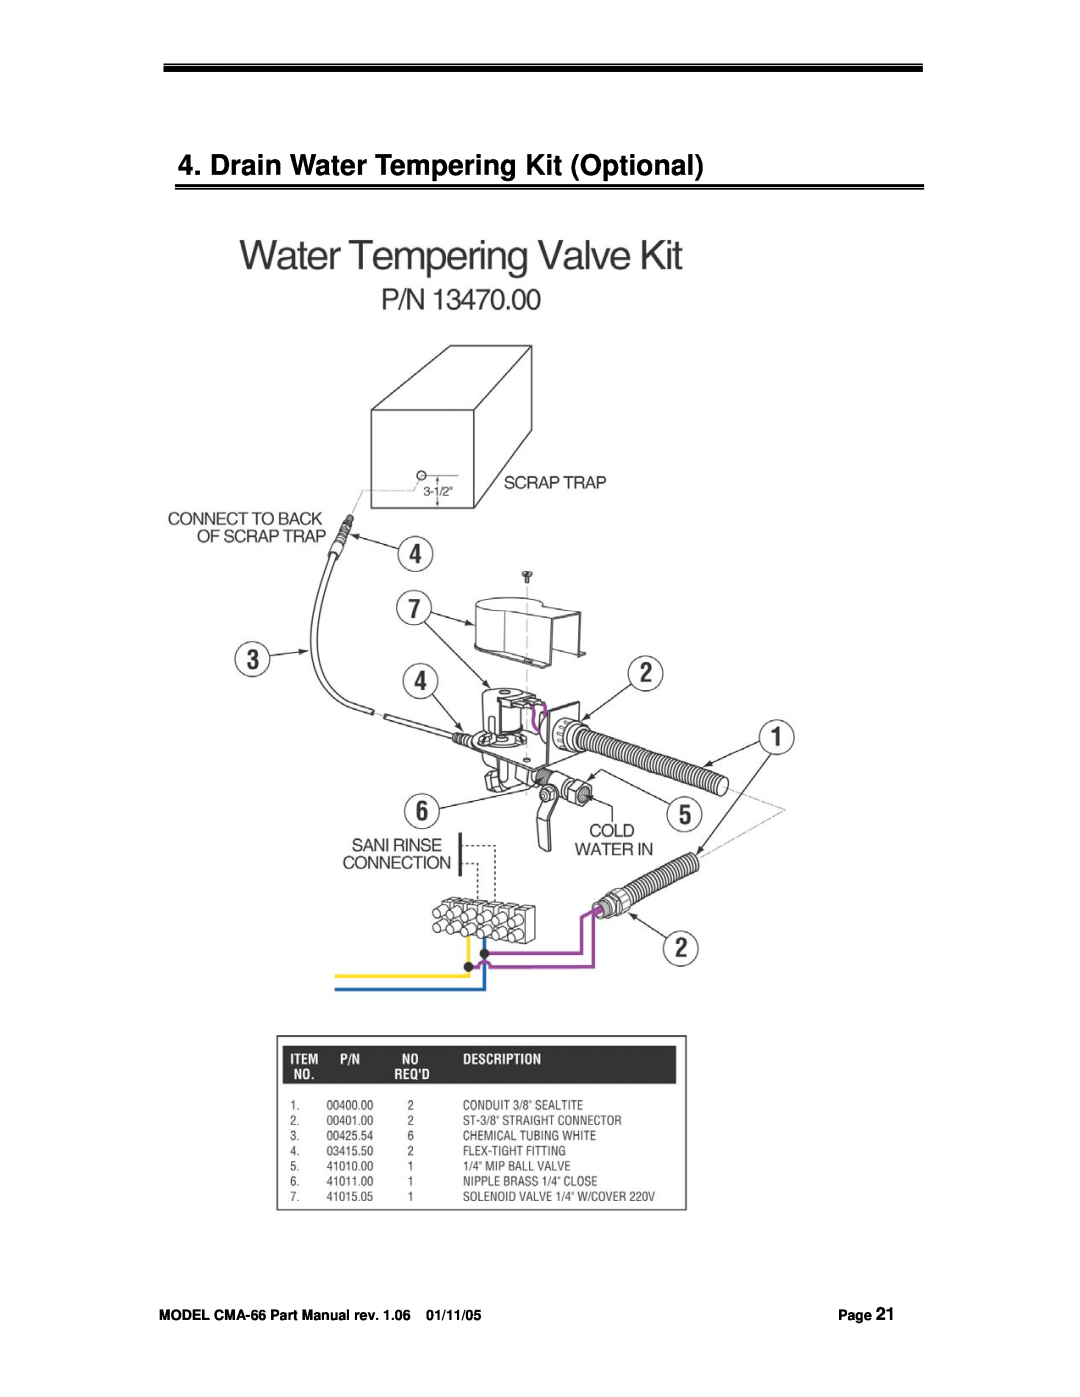 Black Box CMA DISHMACHINE manual Drain Water Tempering Kit Optional, MODEL CMA-66Part Manual rev. 1.06 01/11/05, Page 